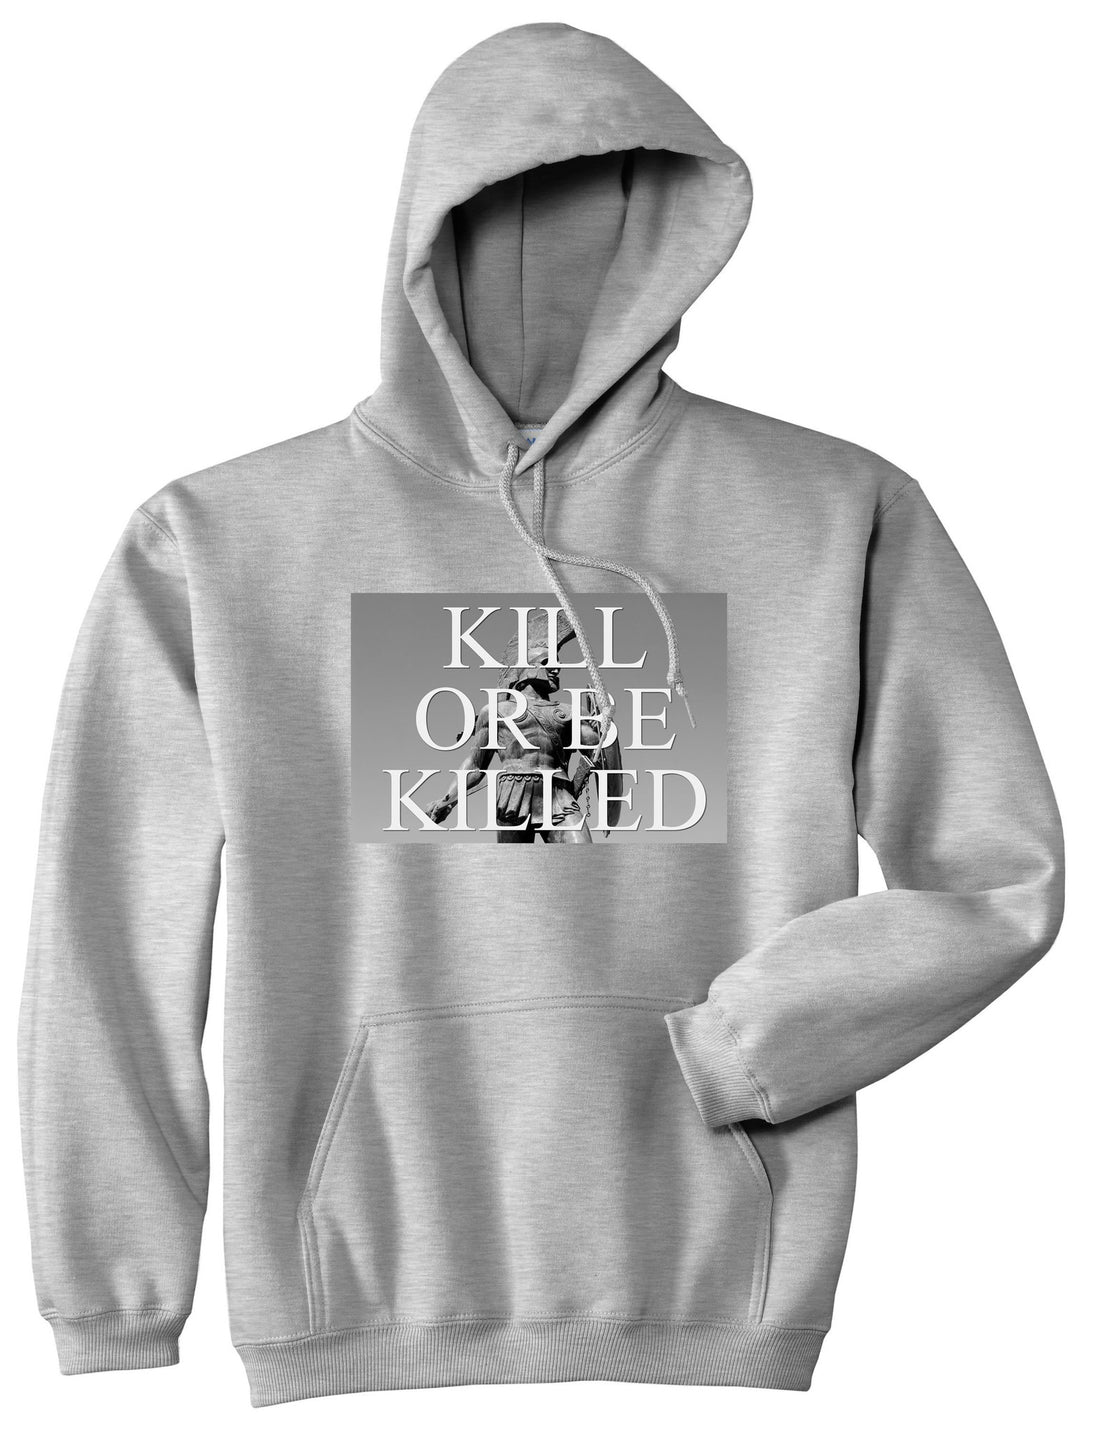 Kill Or Be Killed Boys Kids Pullover Hoodie Hoody in Grey by Kings Of NY